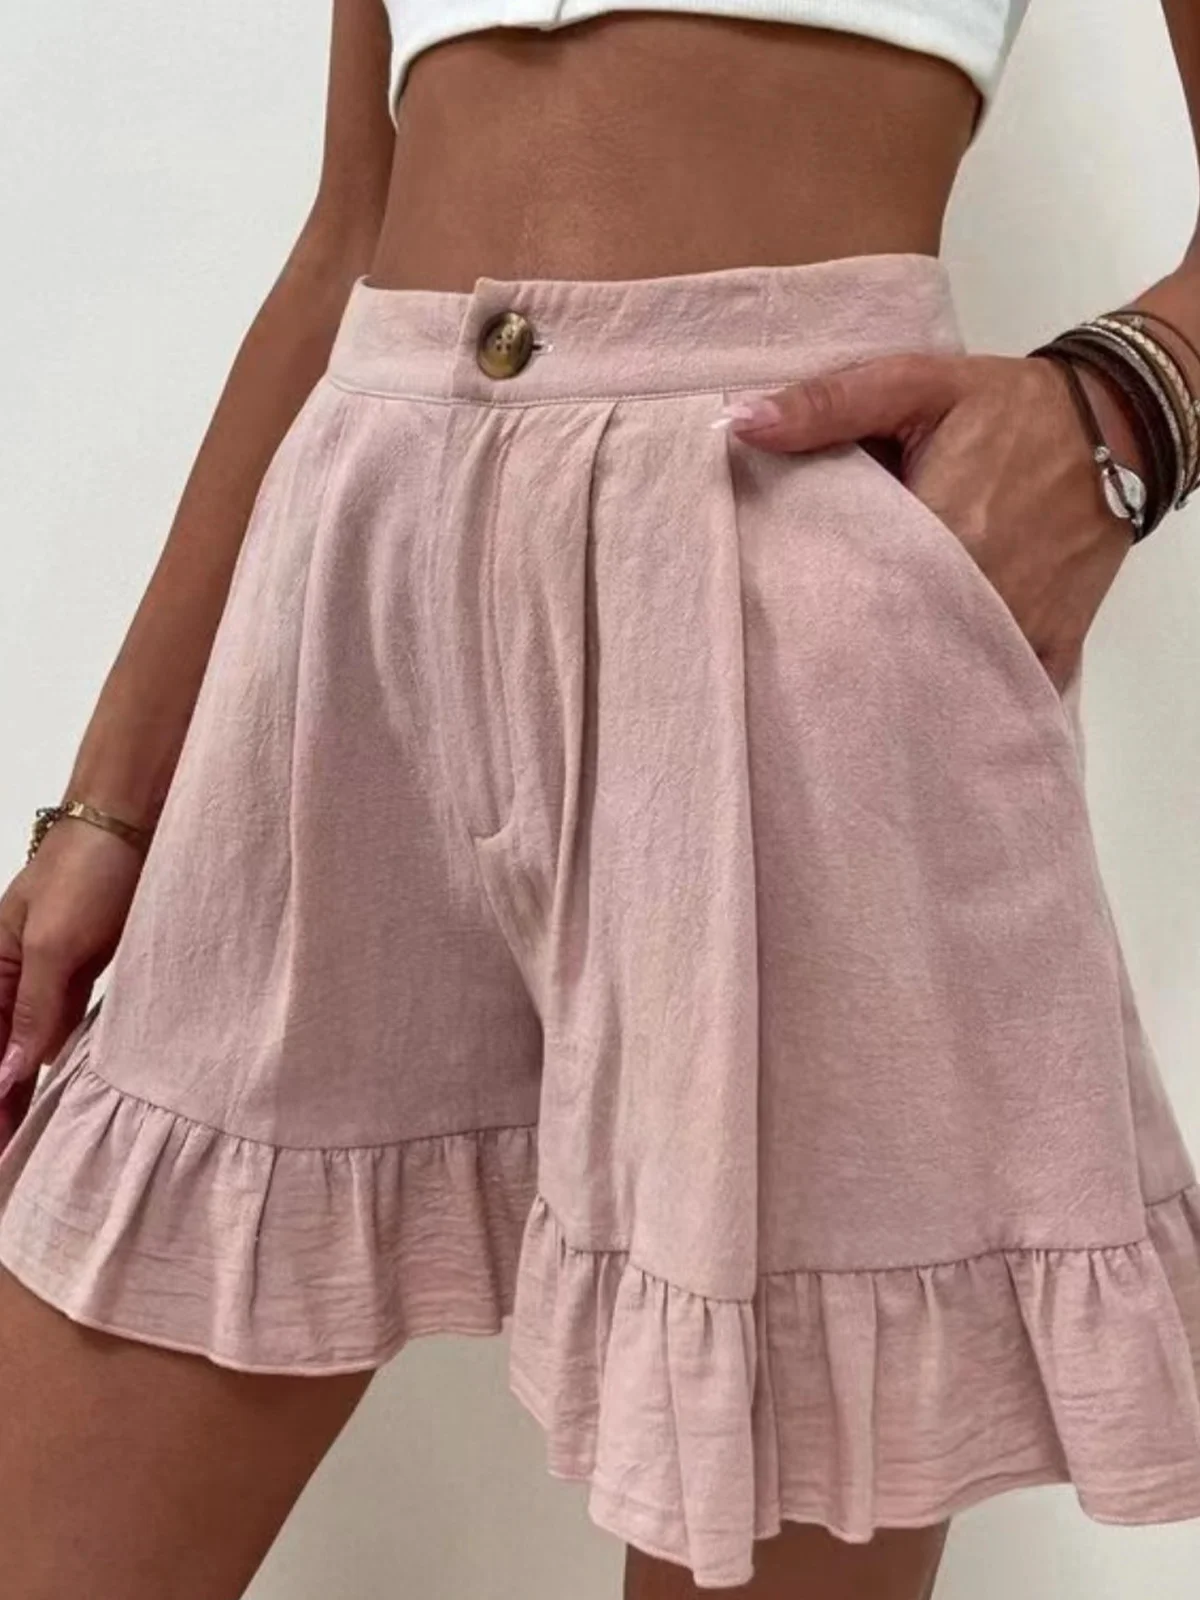 Women Summer Cotton Casual Plain Natural Ruffled Shorts